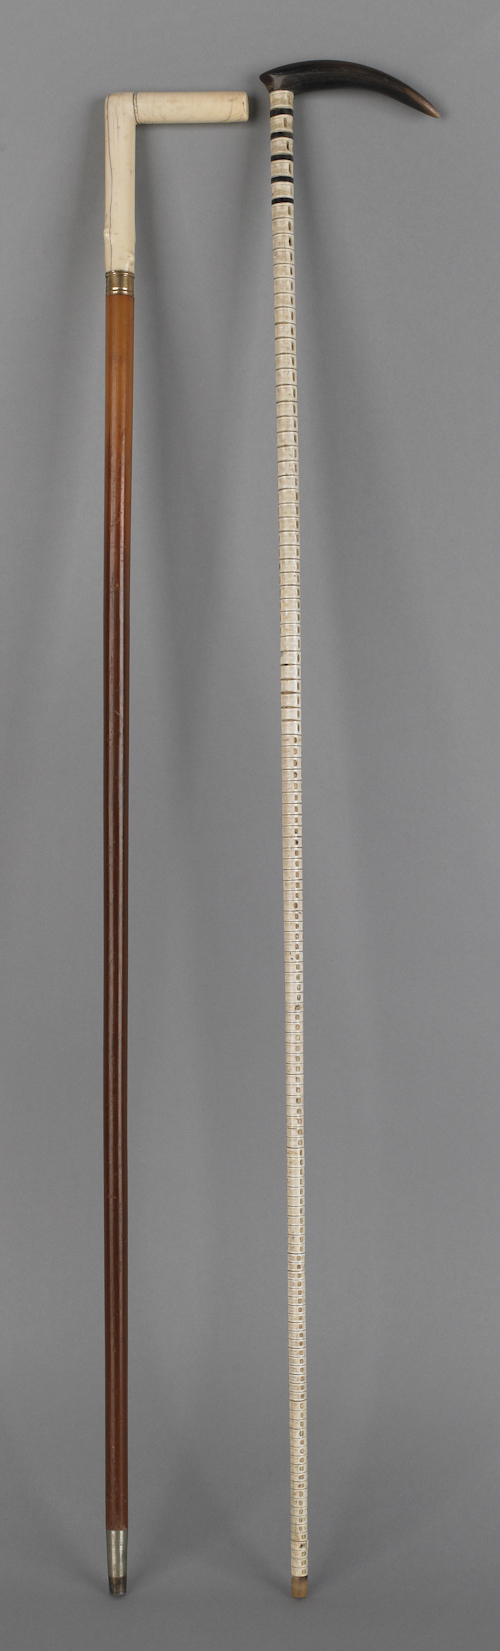 Vertebrae cane with horn grip 34  1752c2